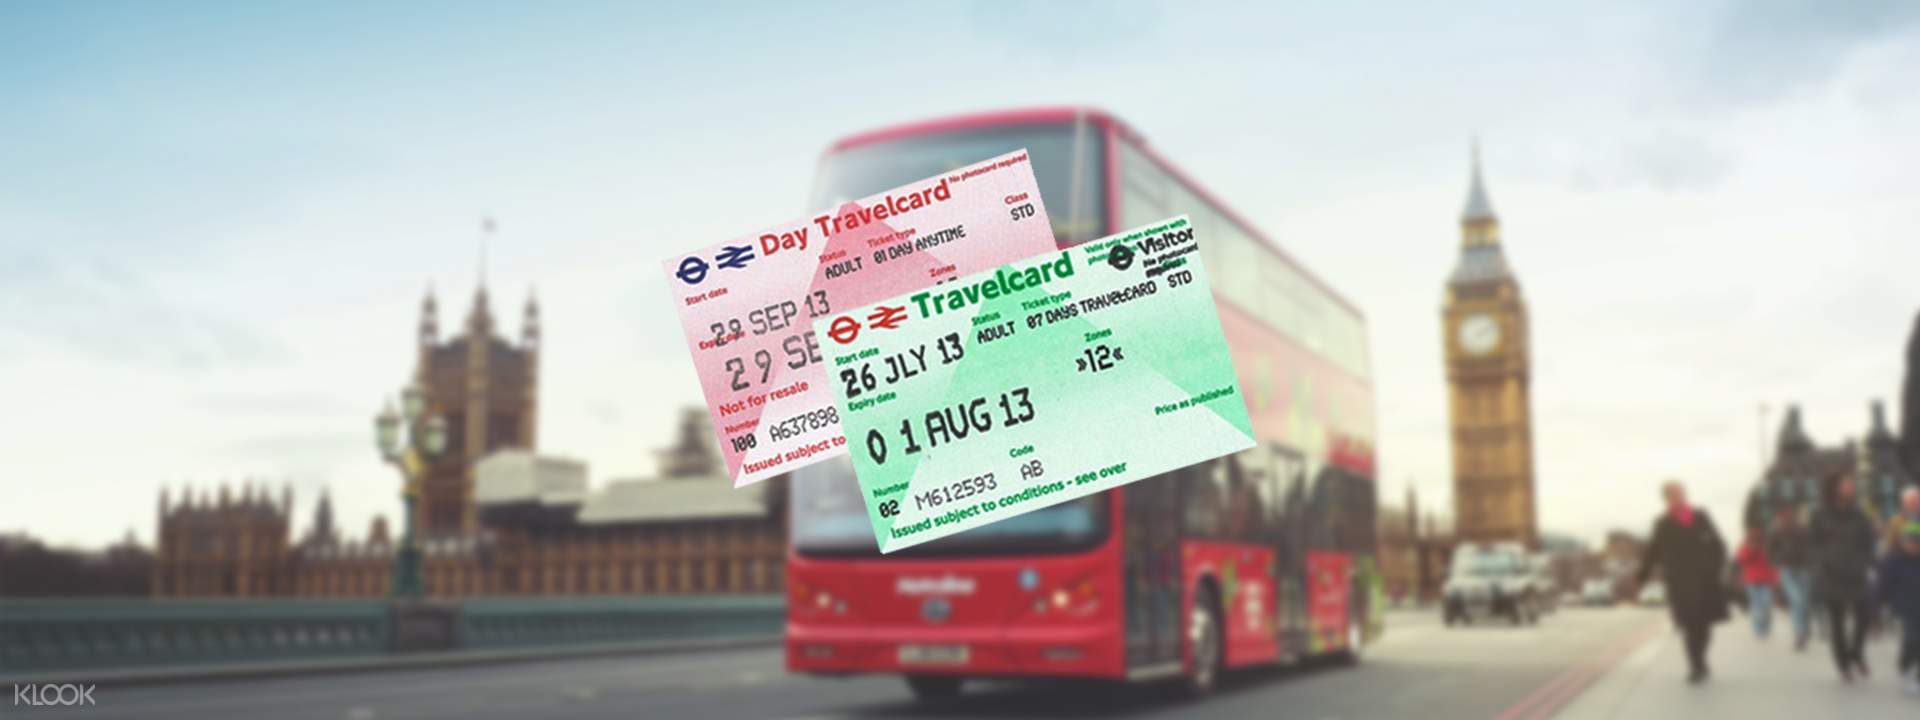 buses travel card london